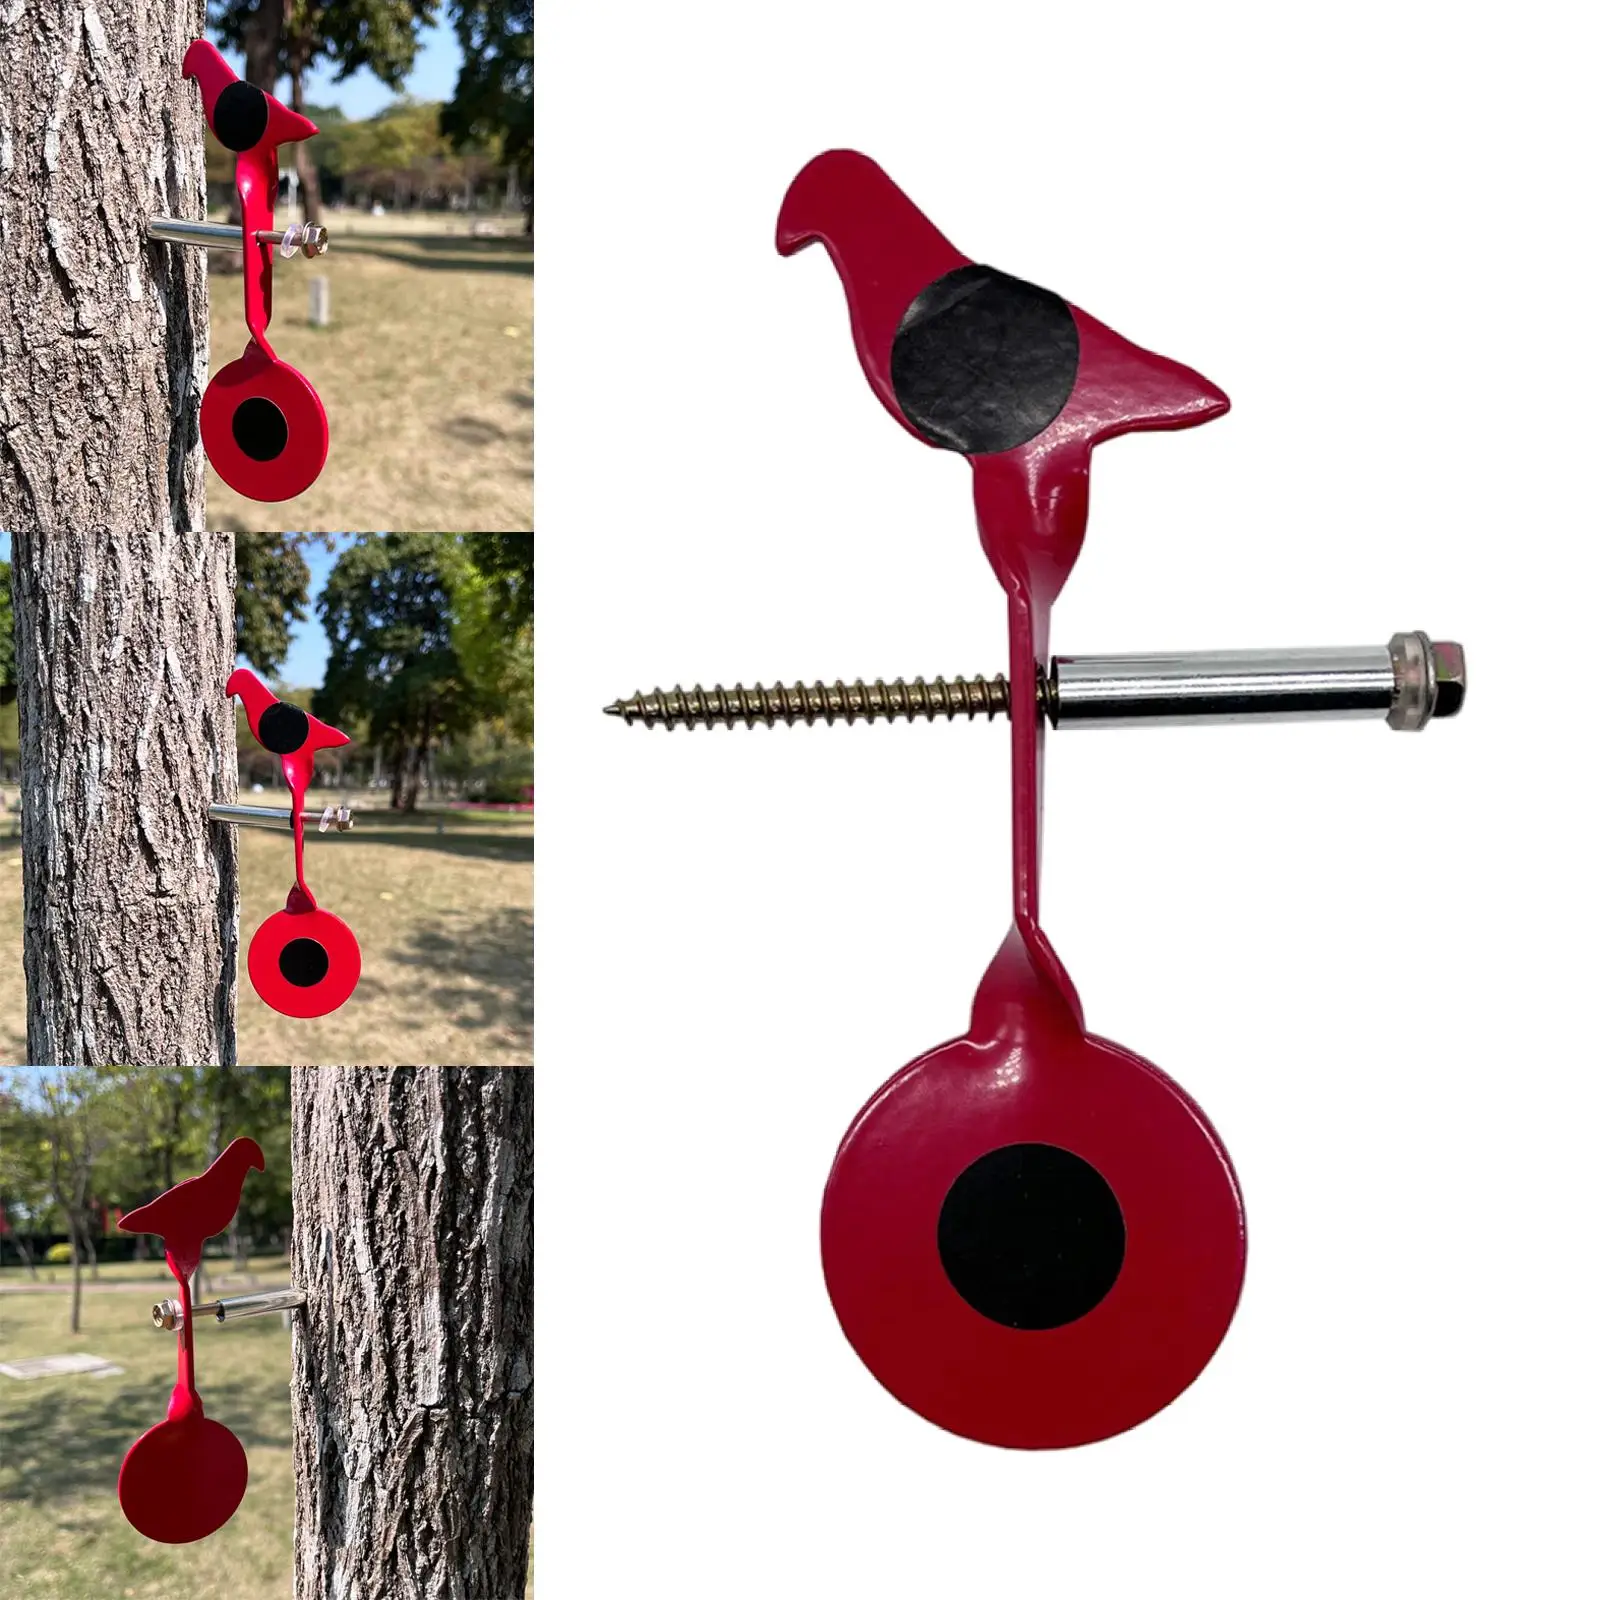 

Bird Shaped Shooting Target Spinner Tree Mount Hanging 360° Rotation Garden Backyard Resetting Target for Training Hunting Range